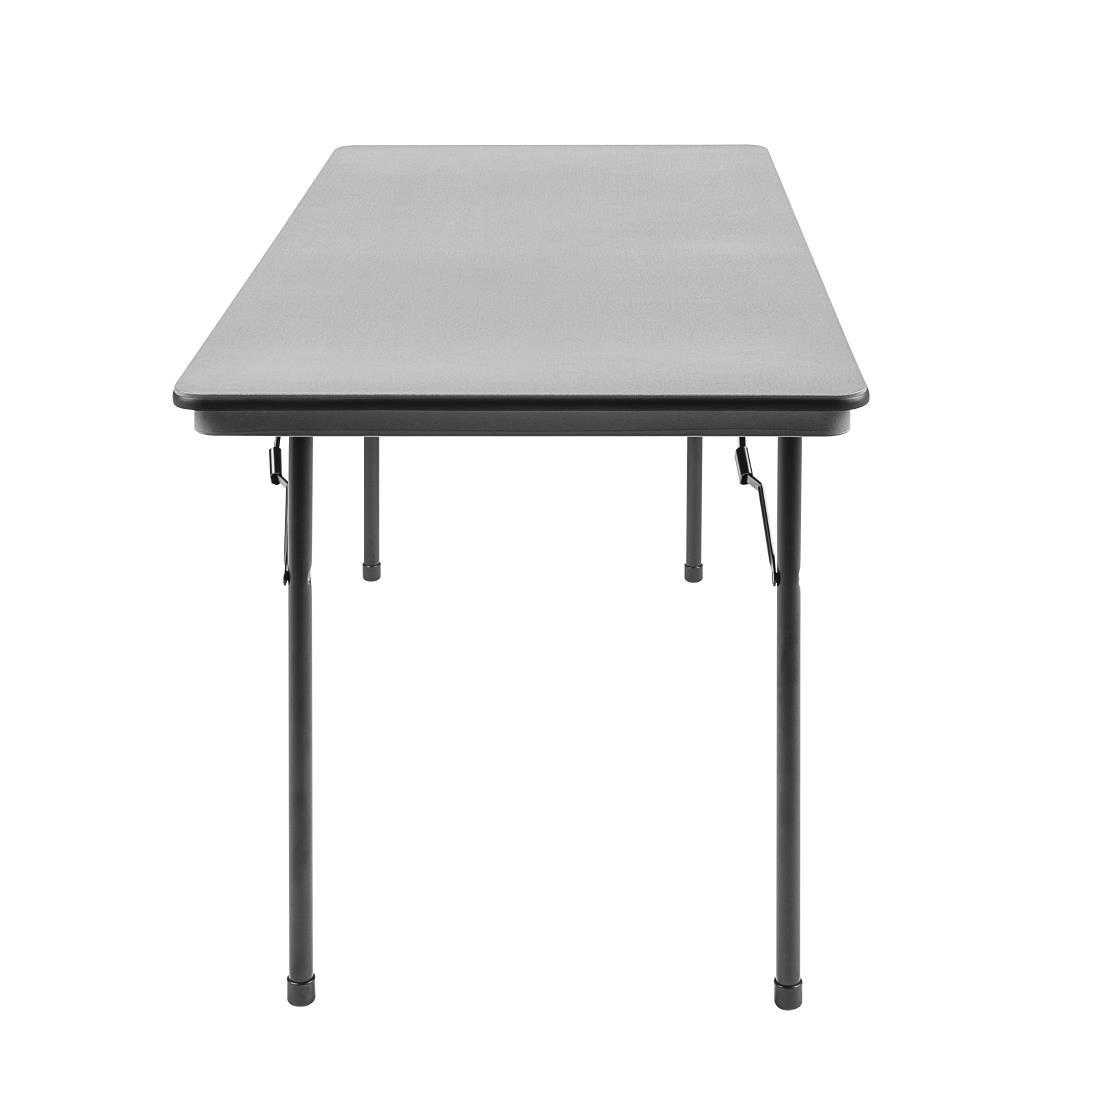 Bolero ABS Rectangular Folding Table Grey 5ft - GC595  - 3